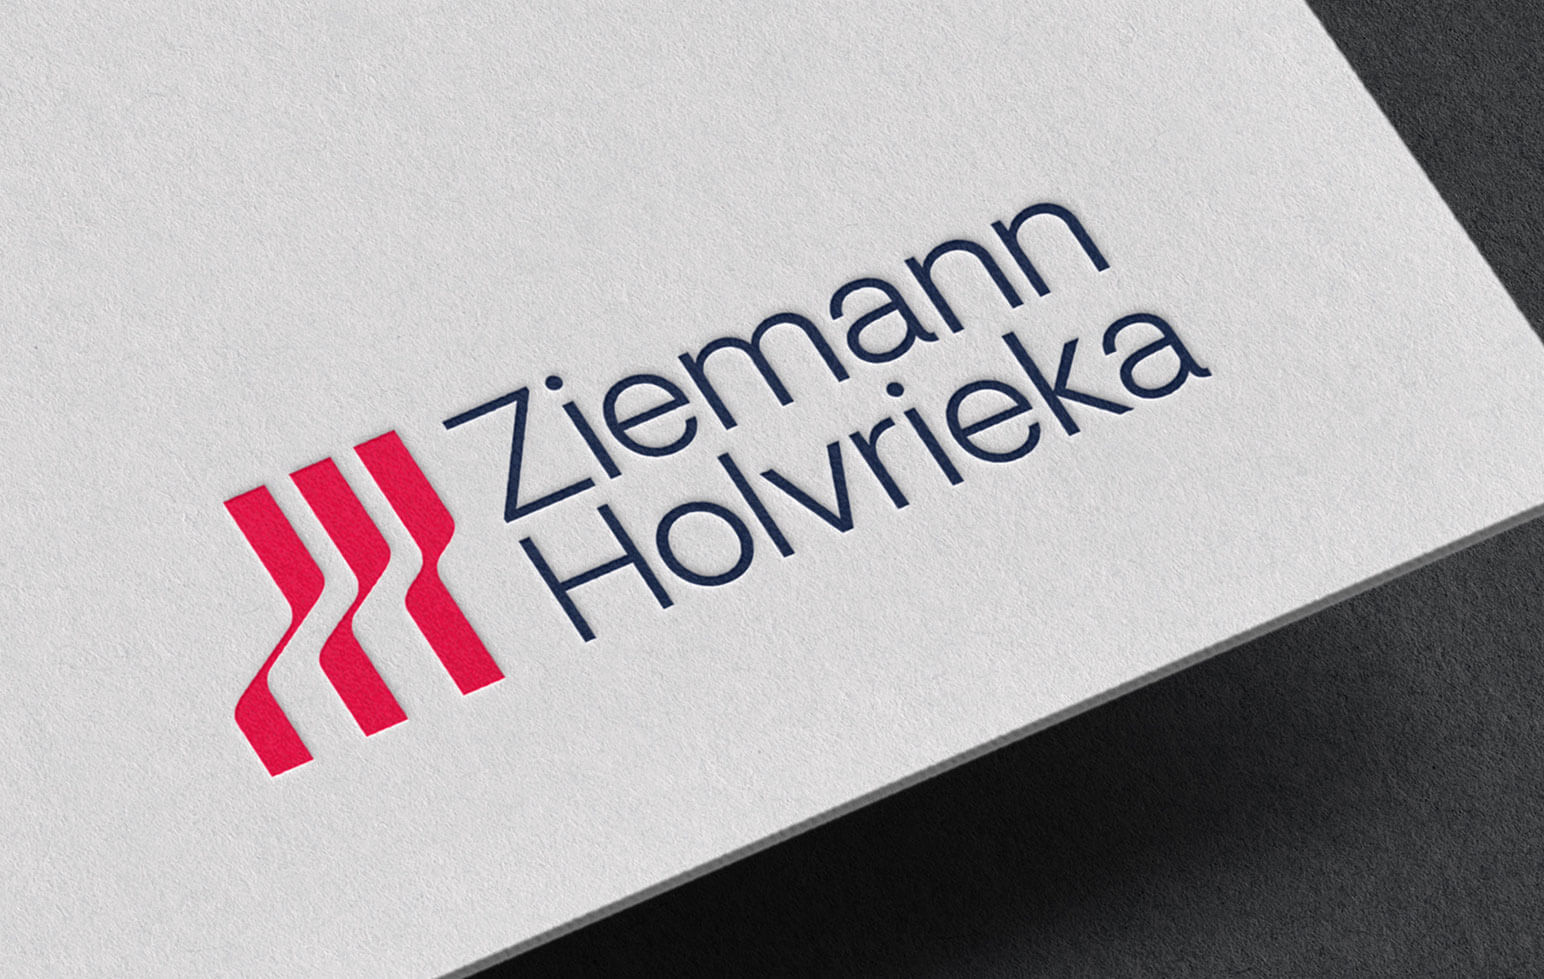 Rebrand and website build for Ziemann Holvrieka